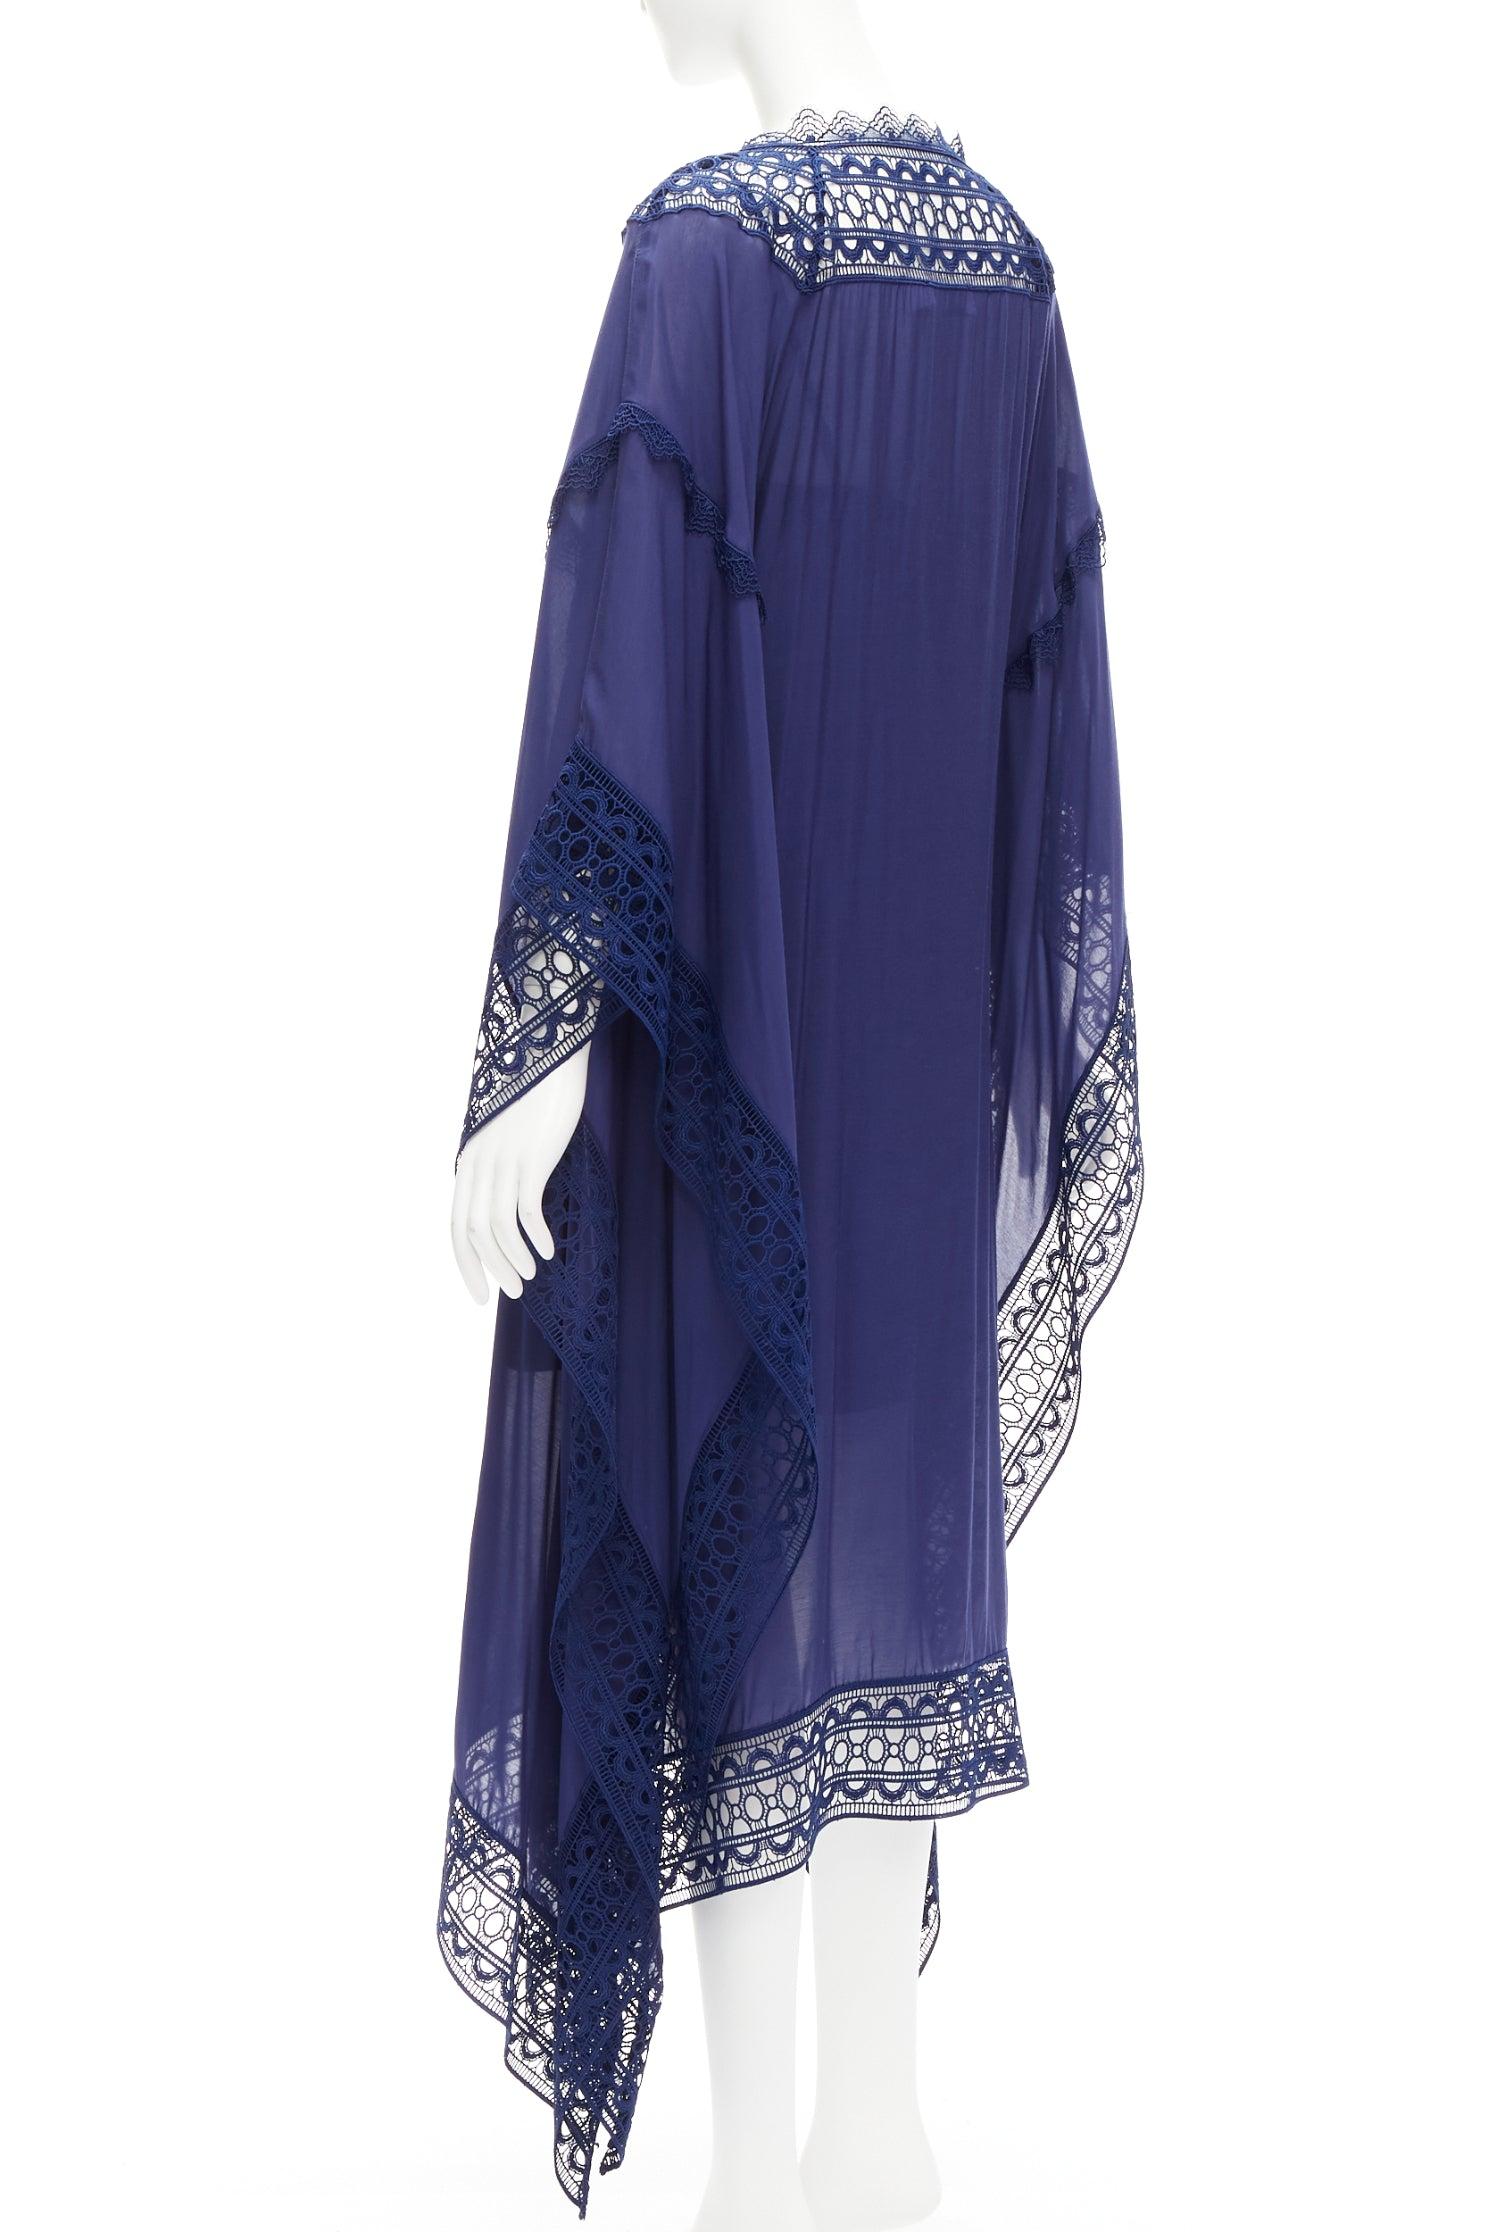 SELF PORTRAIT blue embroidery anglais tie front midi kaftan dress UK8 S For Sale 1